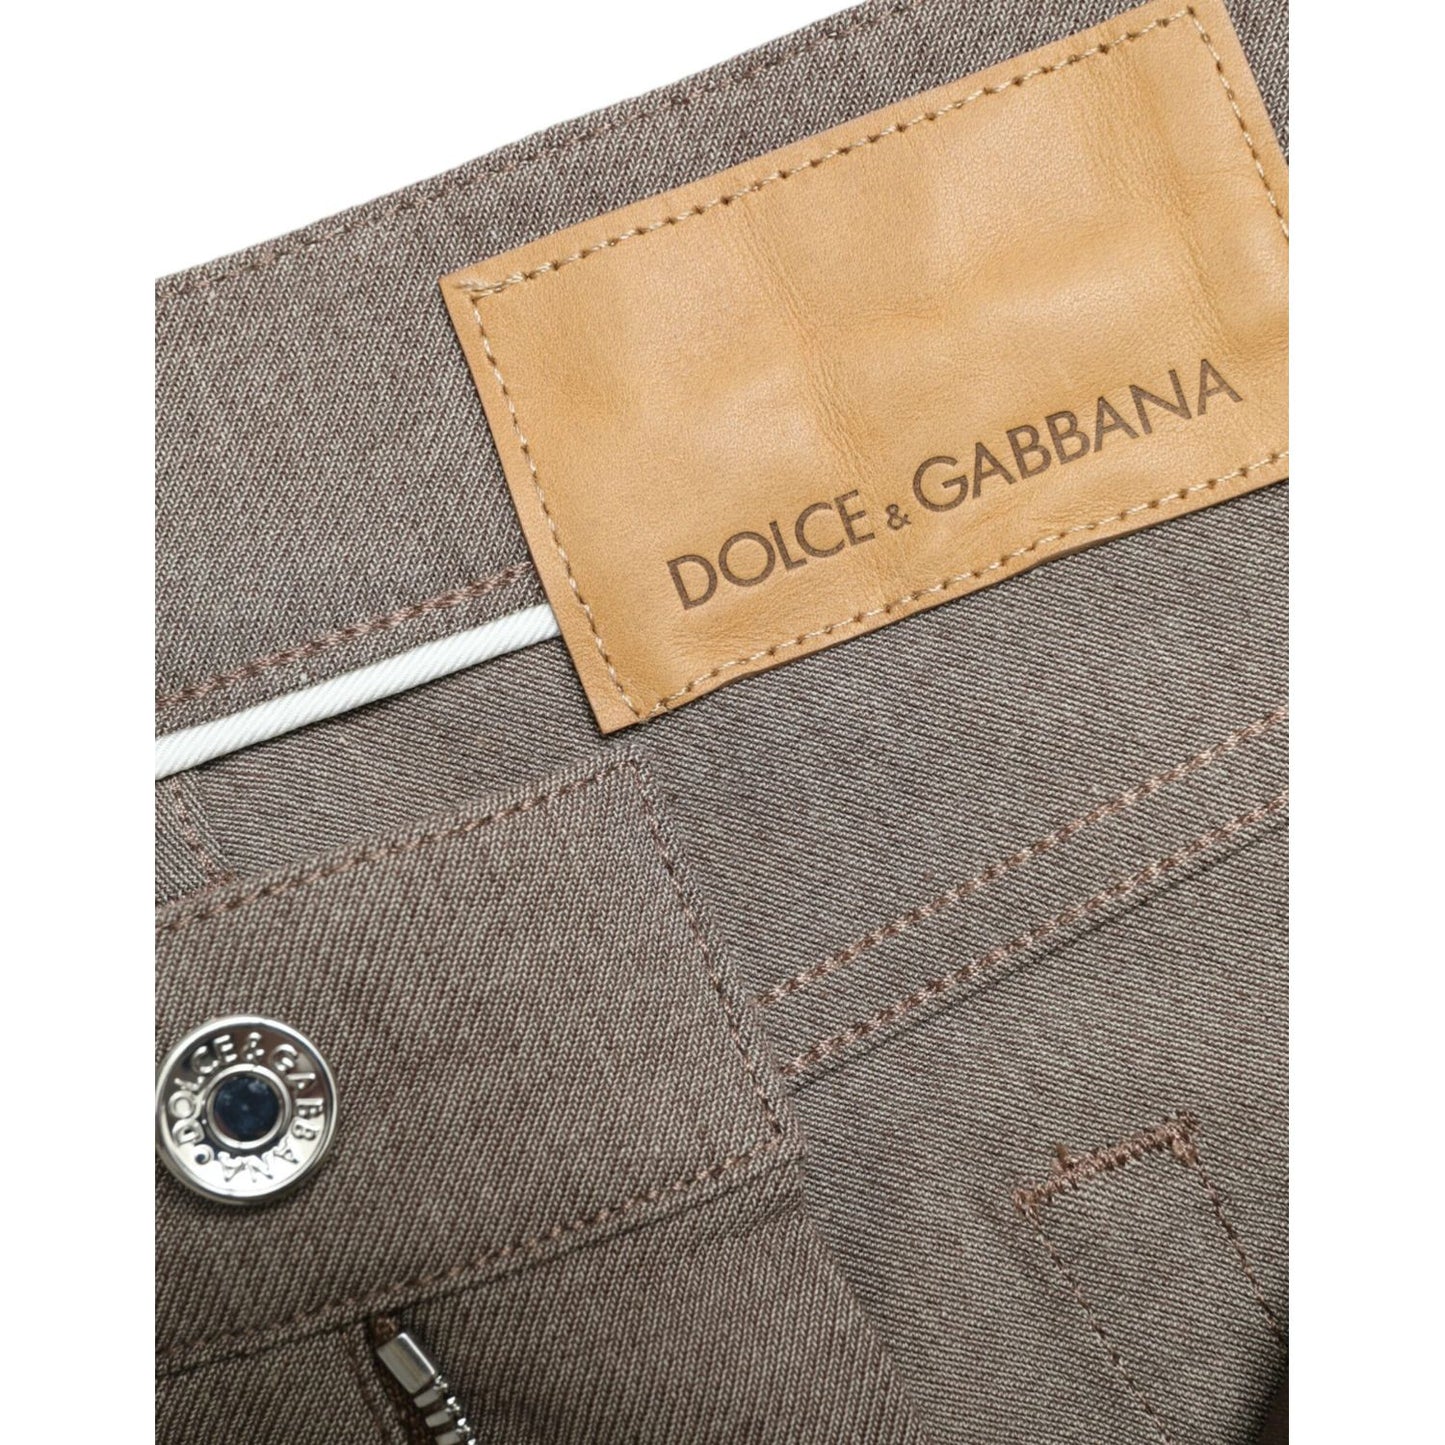 Dolce & Gabbana Elegant Brown Cotton Stretch Skinny Pants brown-cotton-stretch-skinny-men-pants